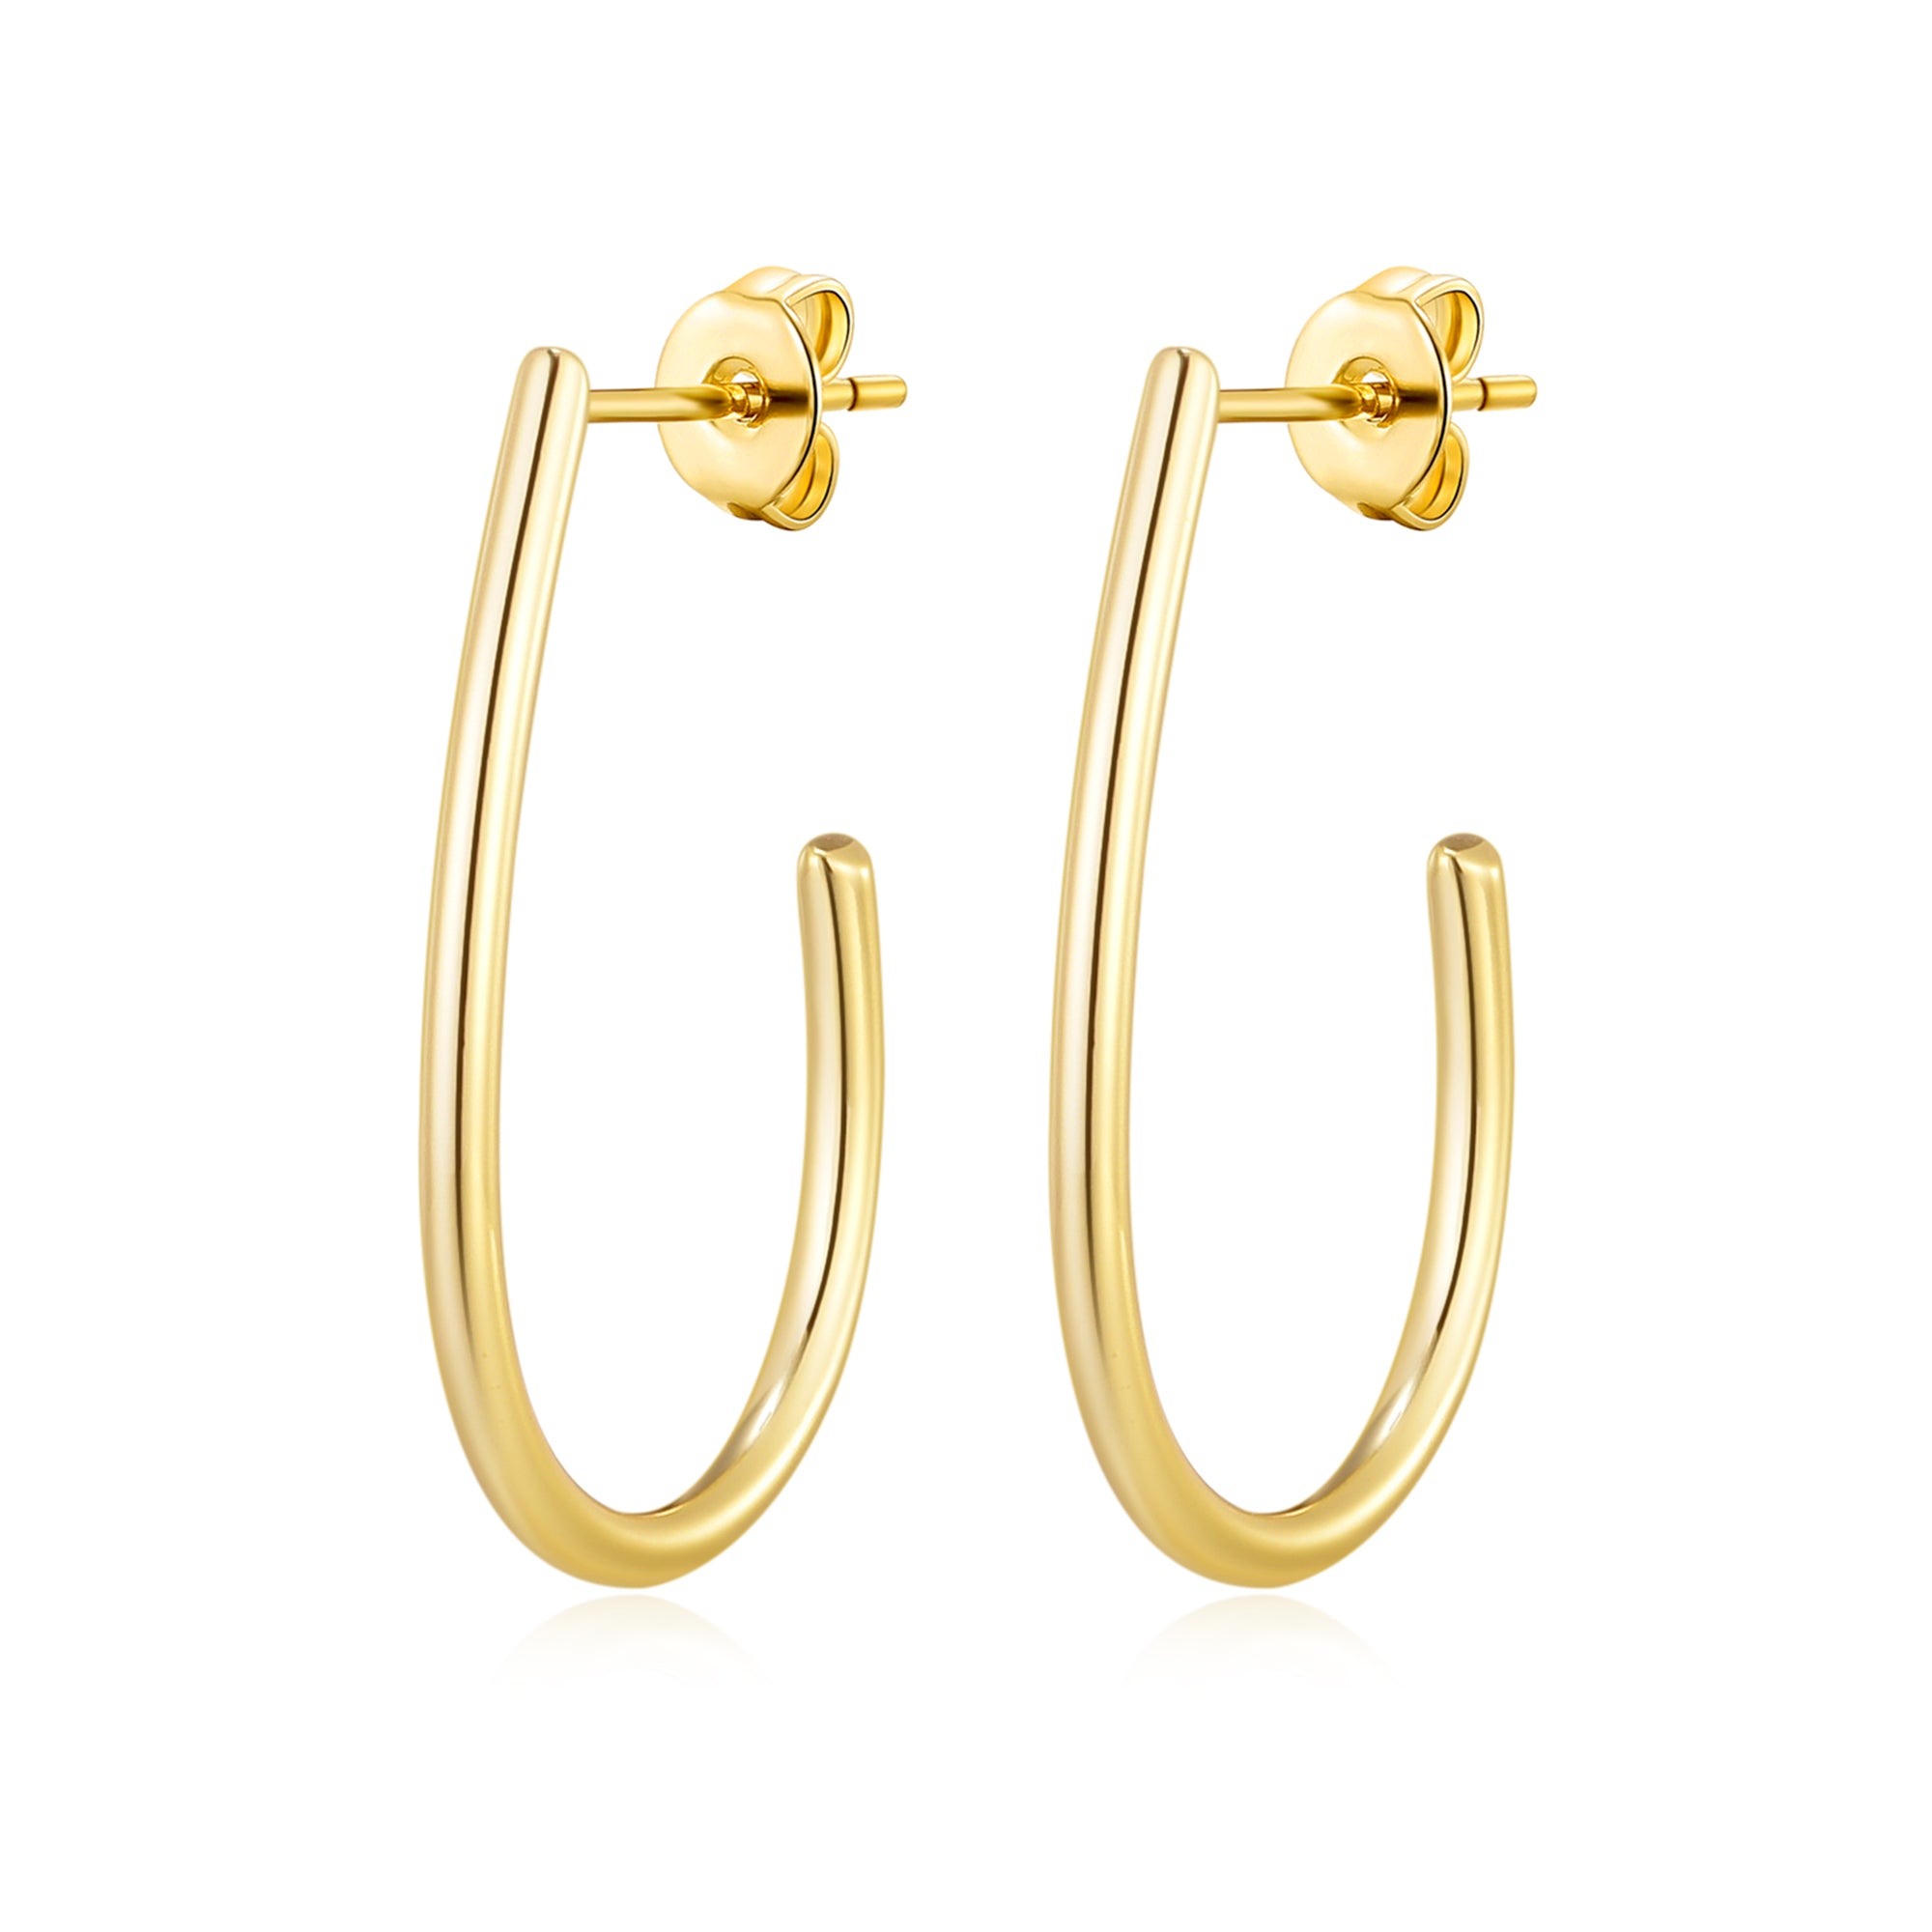 Gold Plated Oval Hoop Earrings by Philip Jones Jewellery